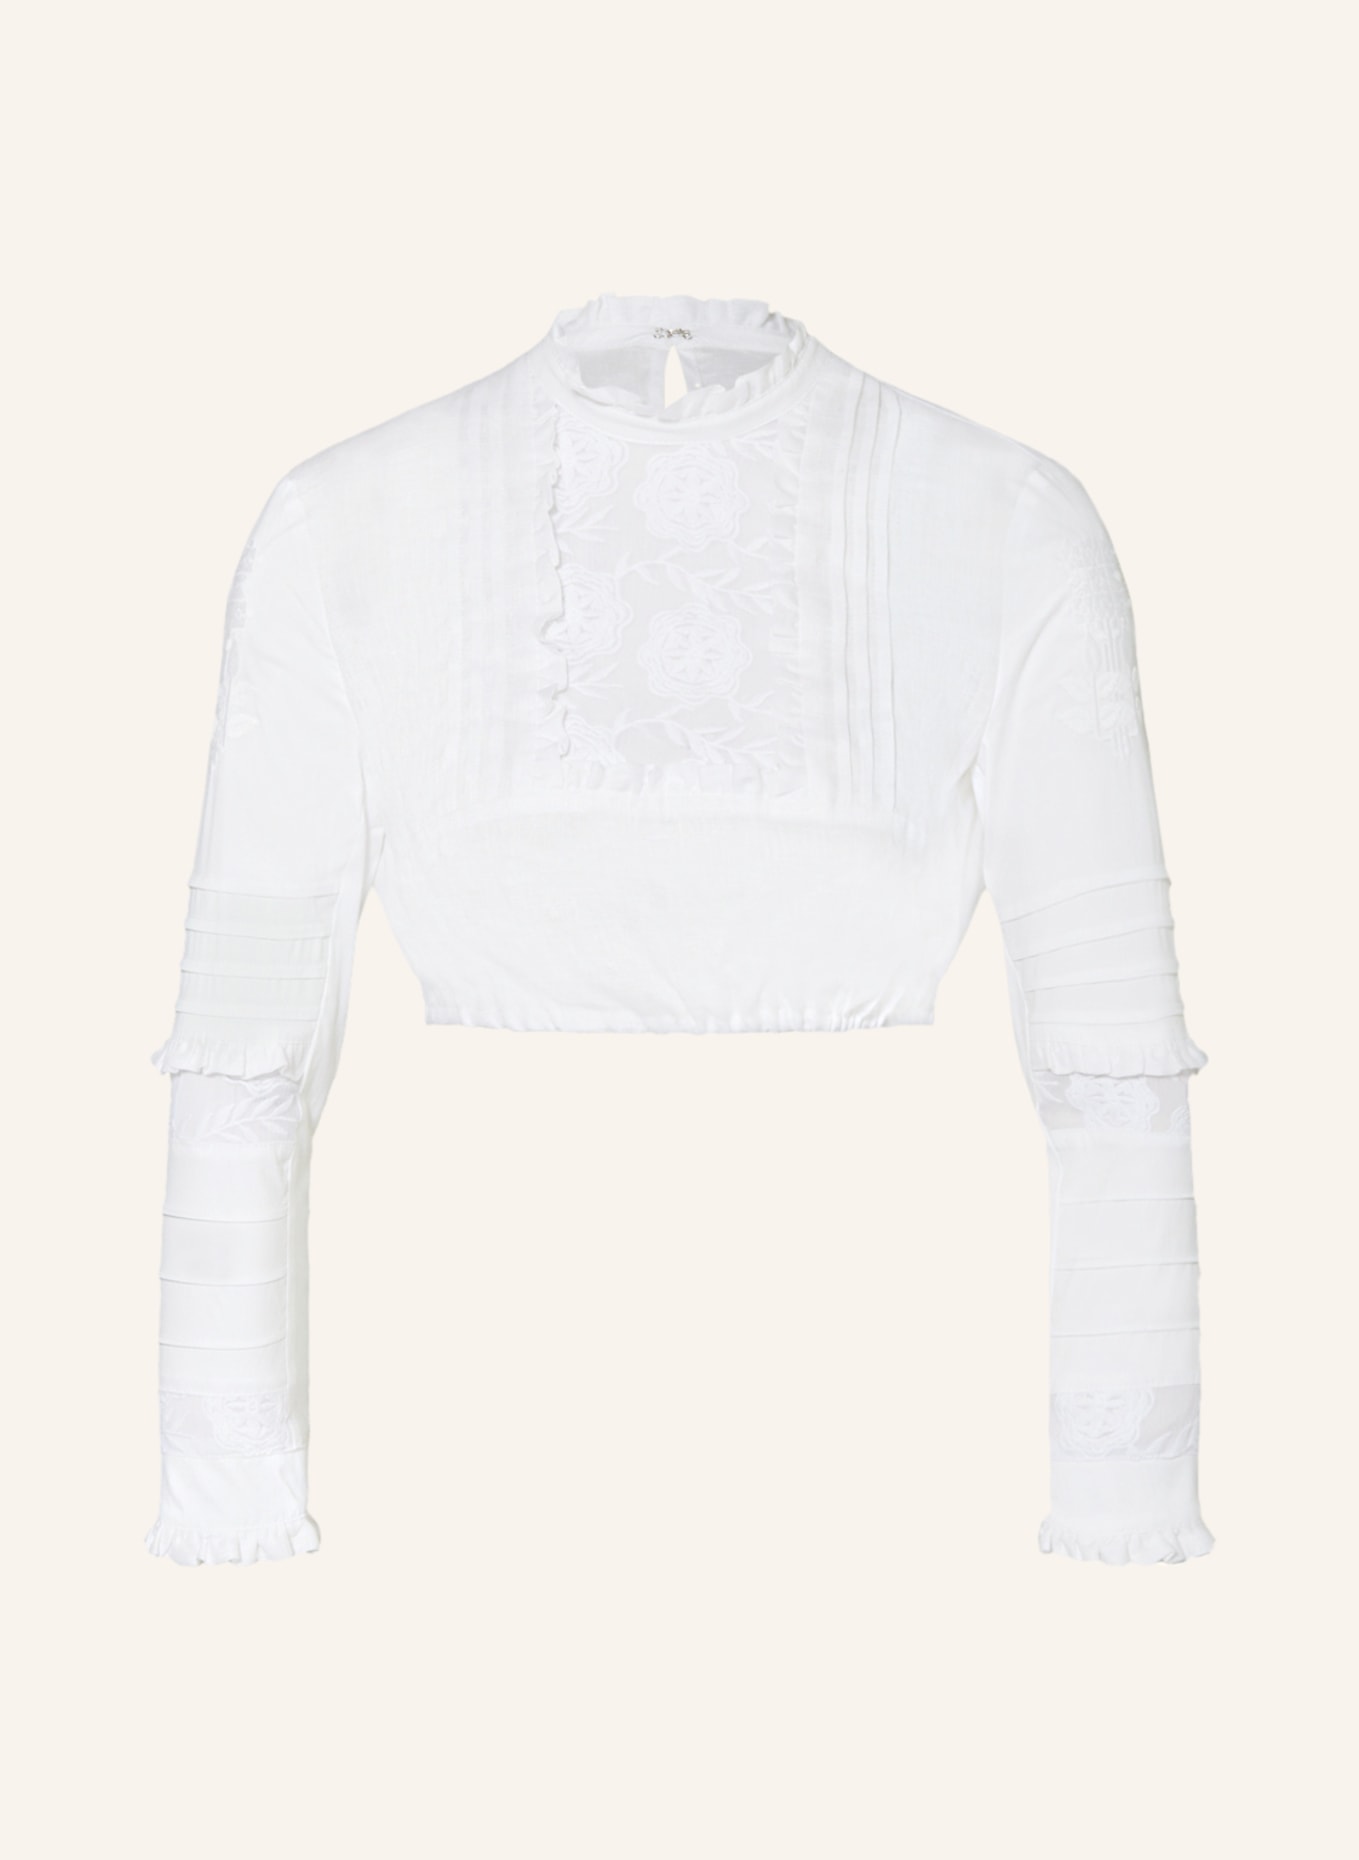 SPORTALM Dirndl blouse made of linen, Color: WHITE (Image 1)